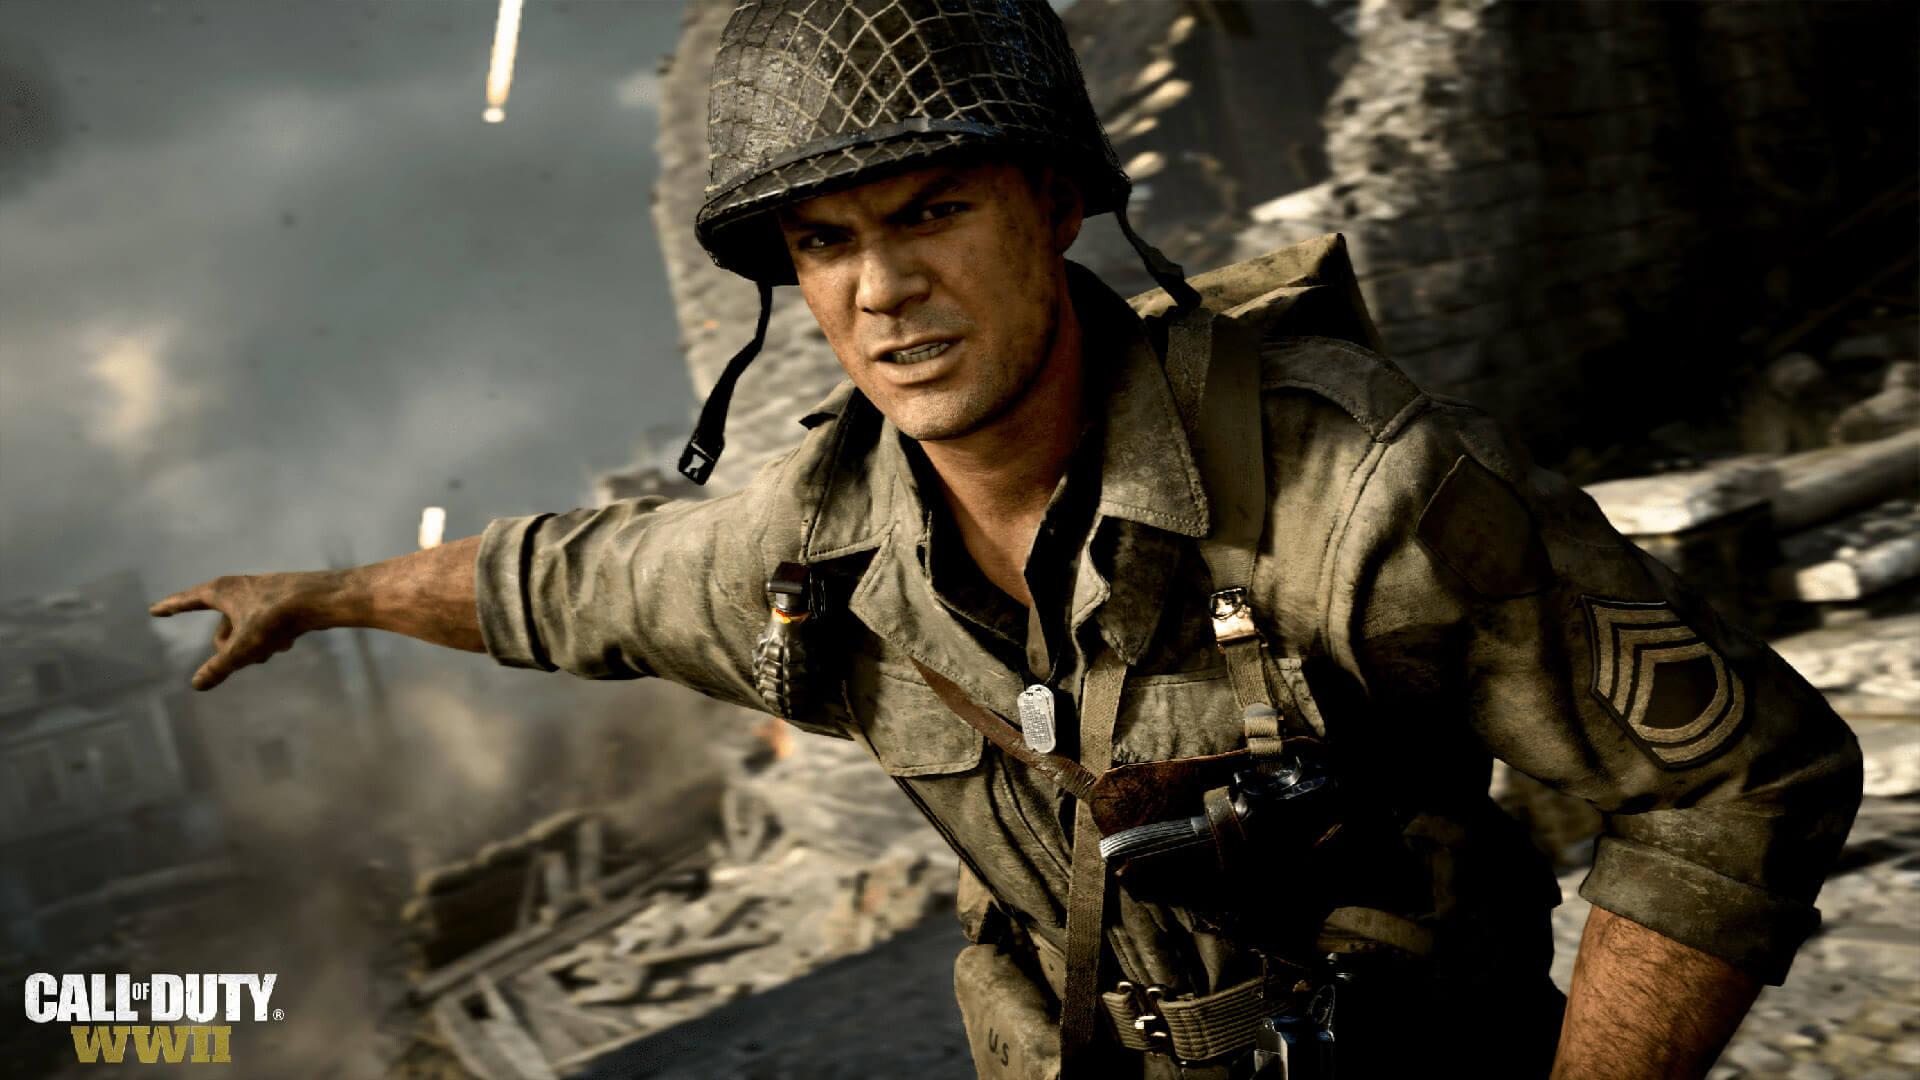 Character in Call of Duty: World War II